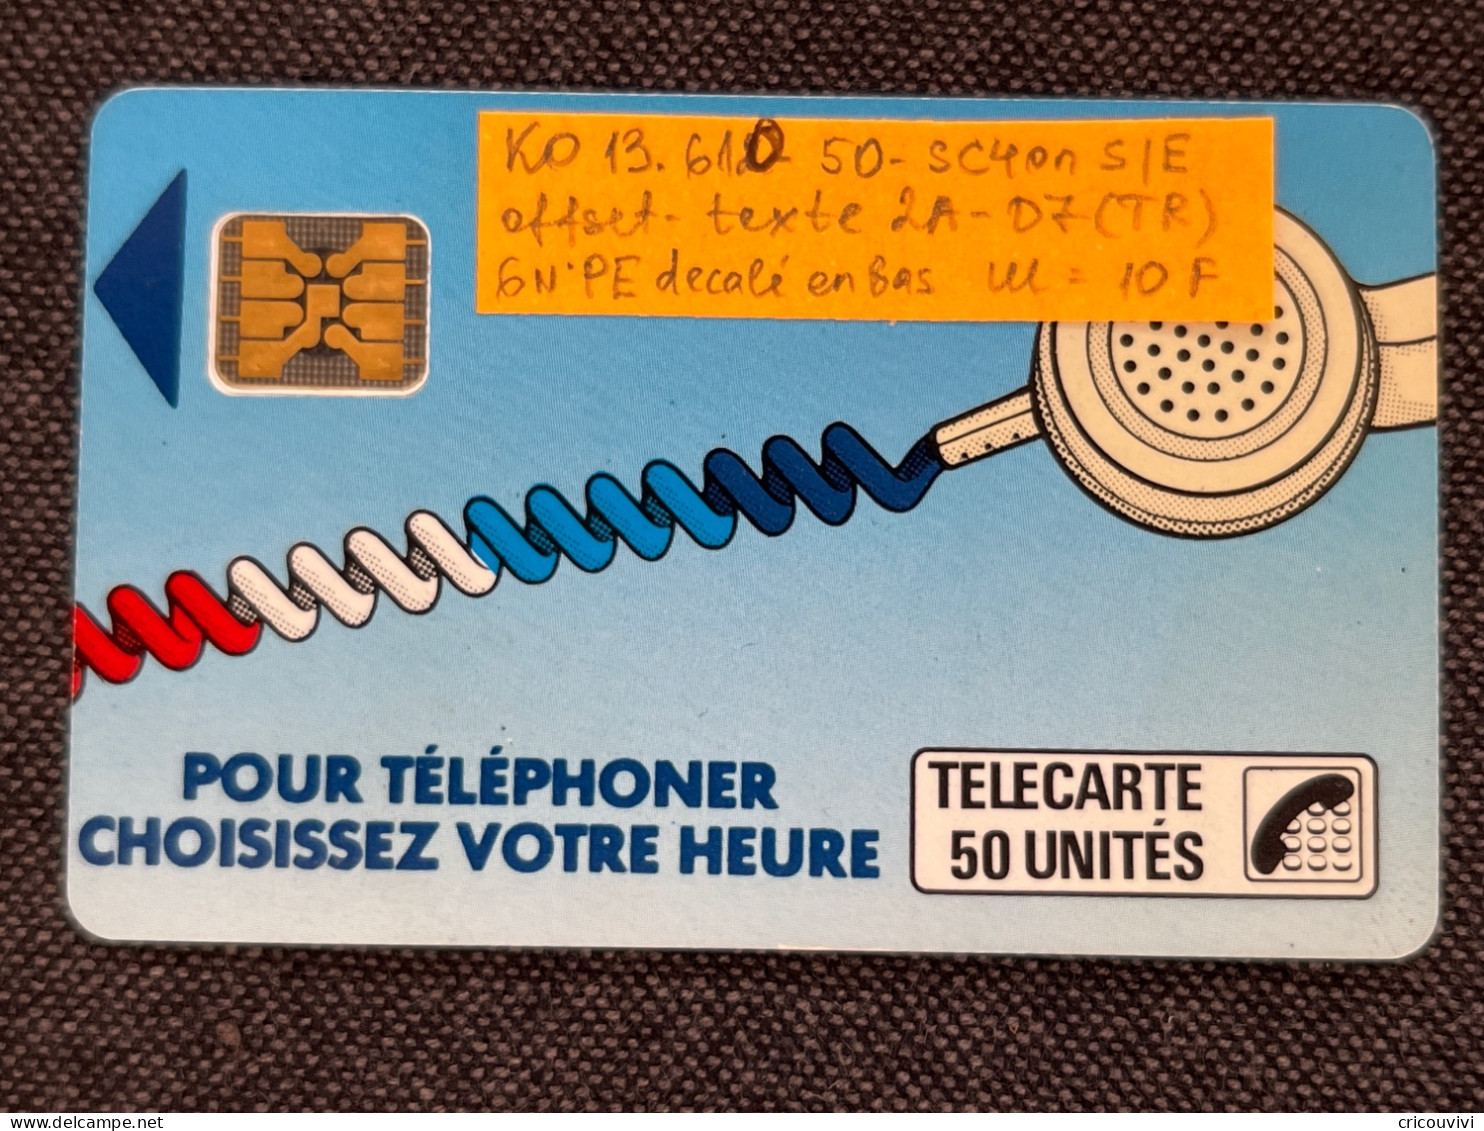 Cordon Ko13-610 - Telefonschnur (Cordon)